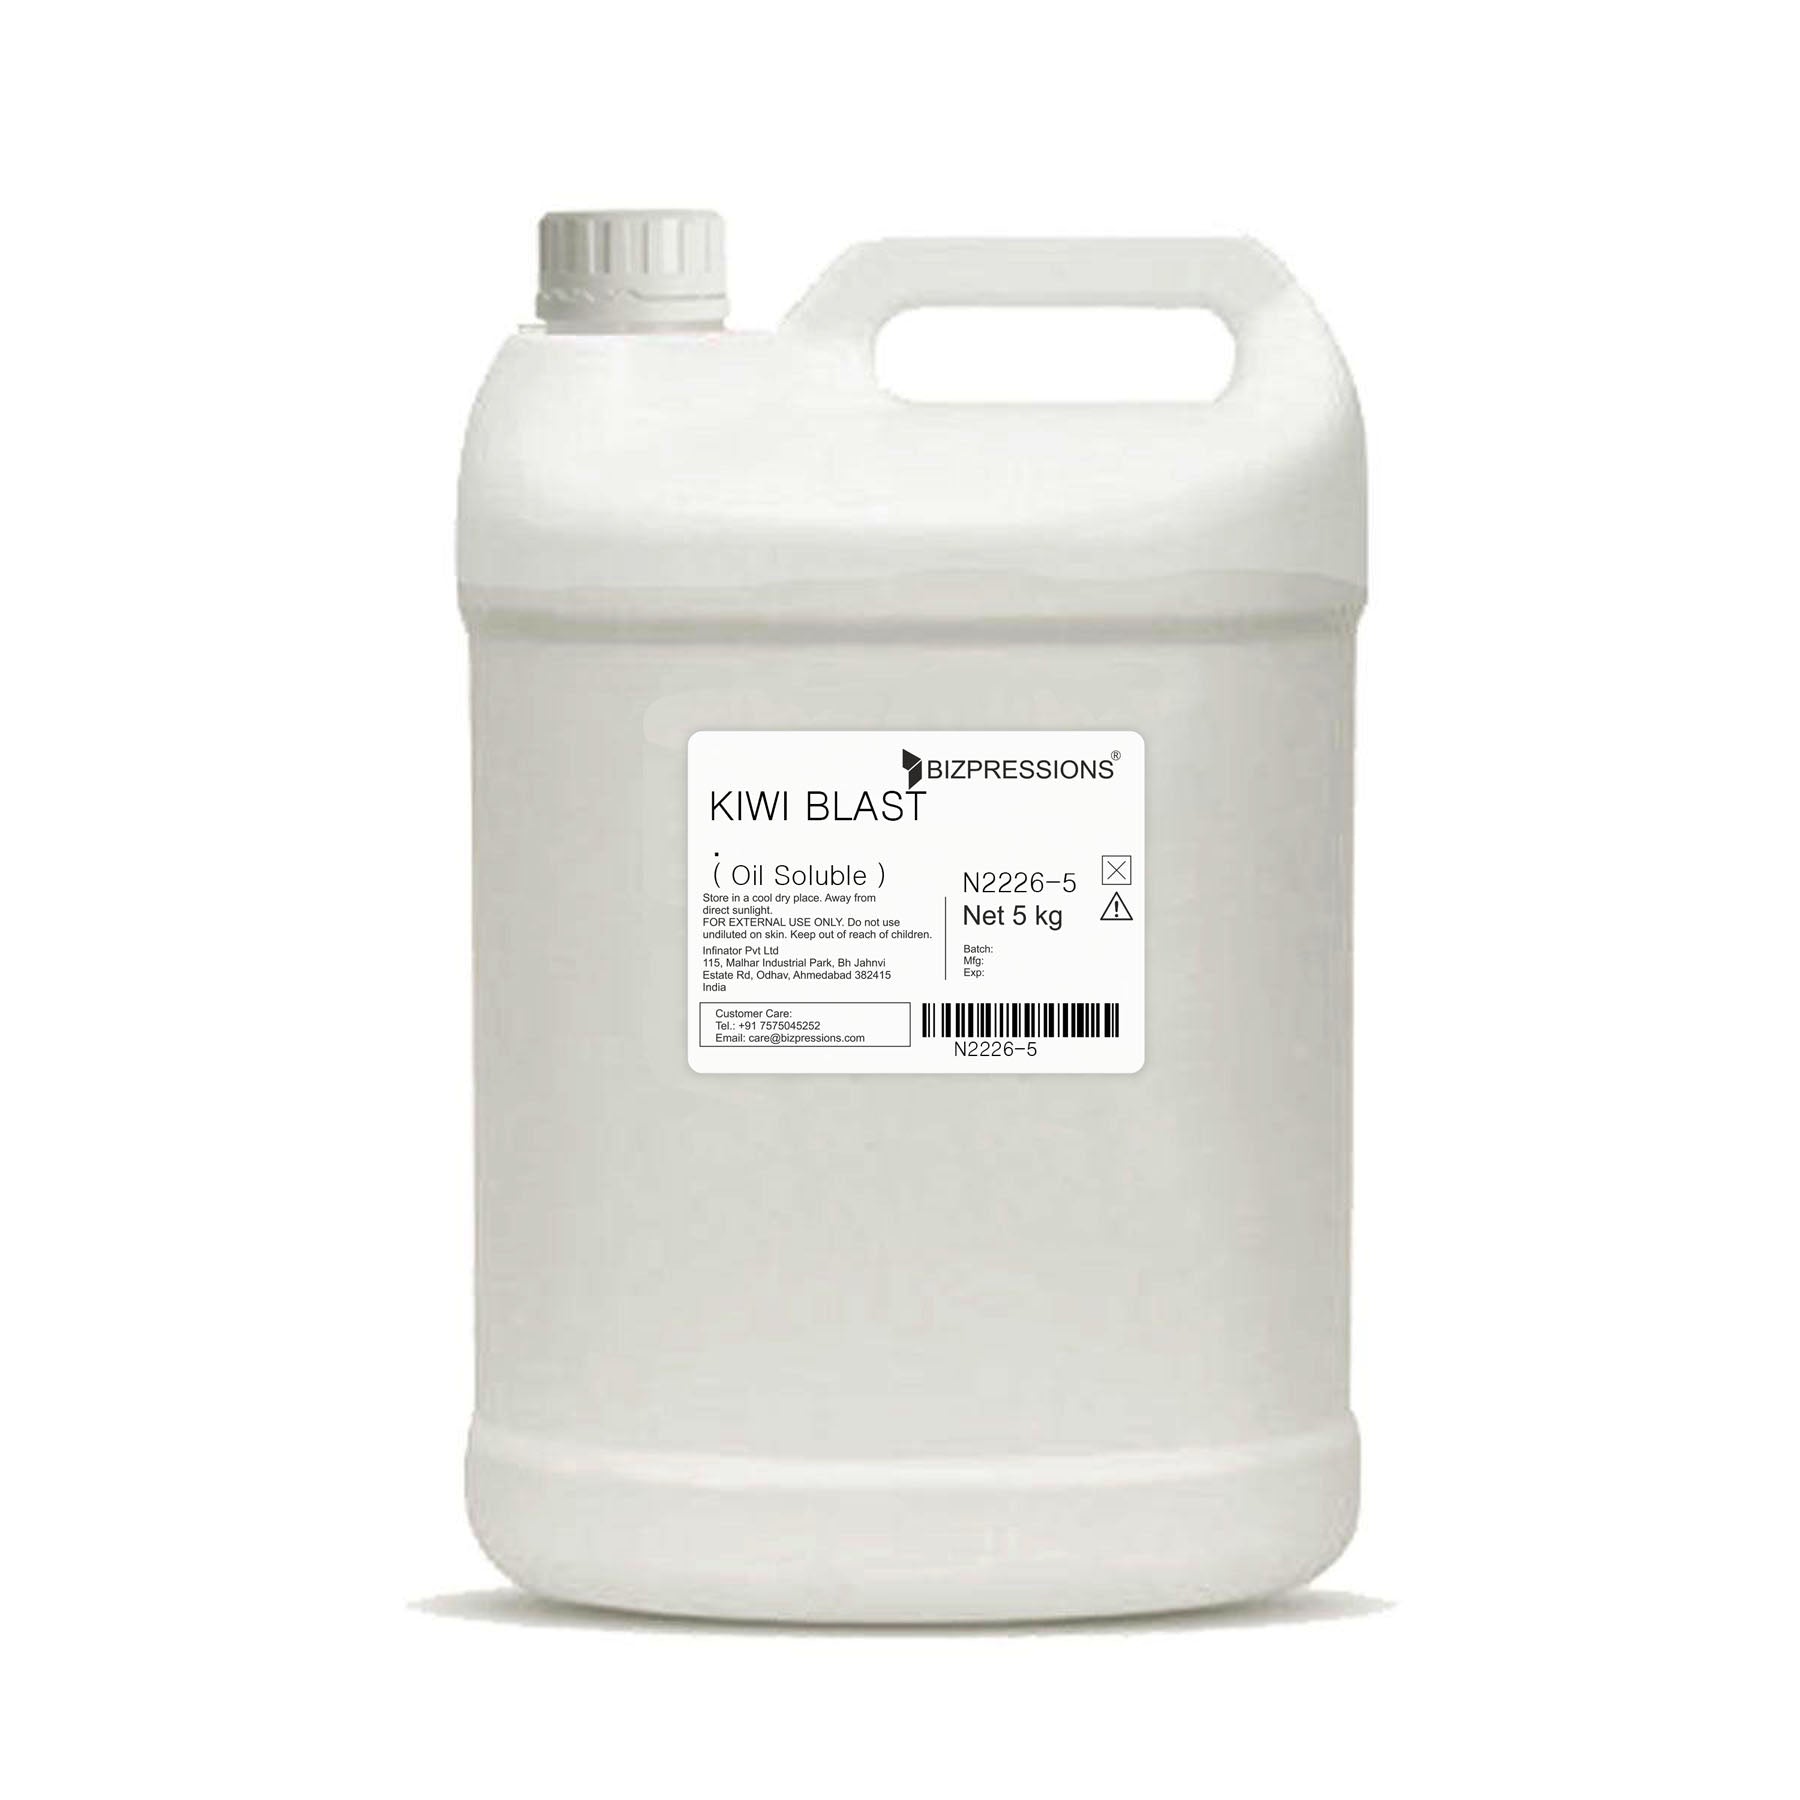 KIWI BLAST - Fragrance ( Oil Soluble ) - 5 kg